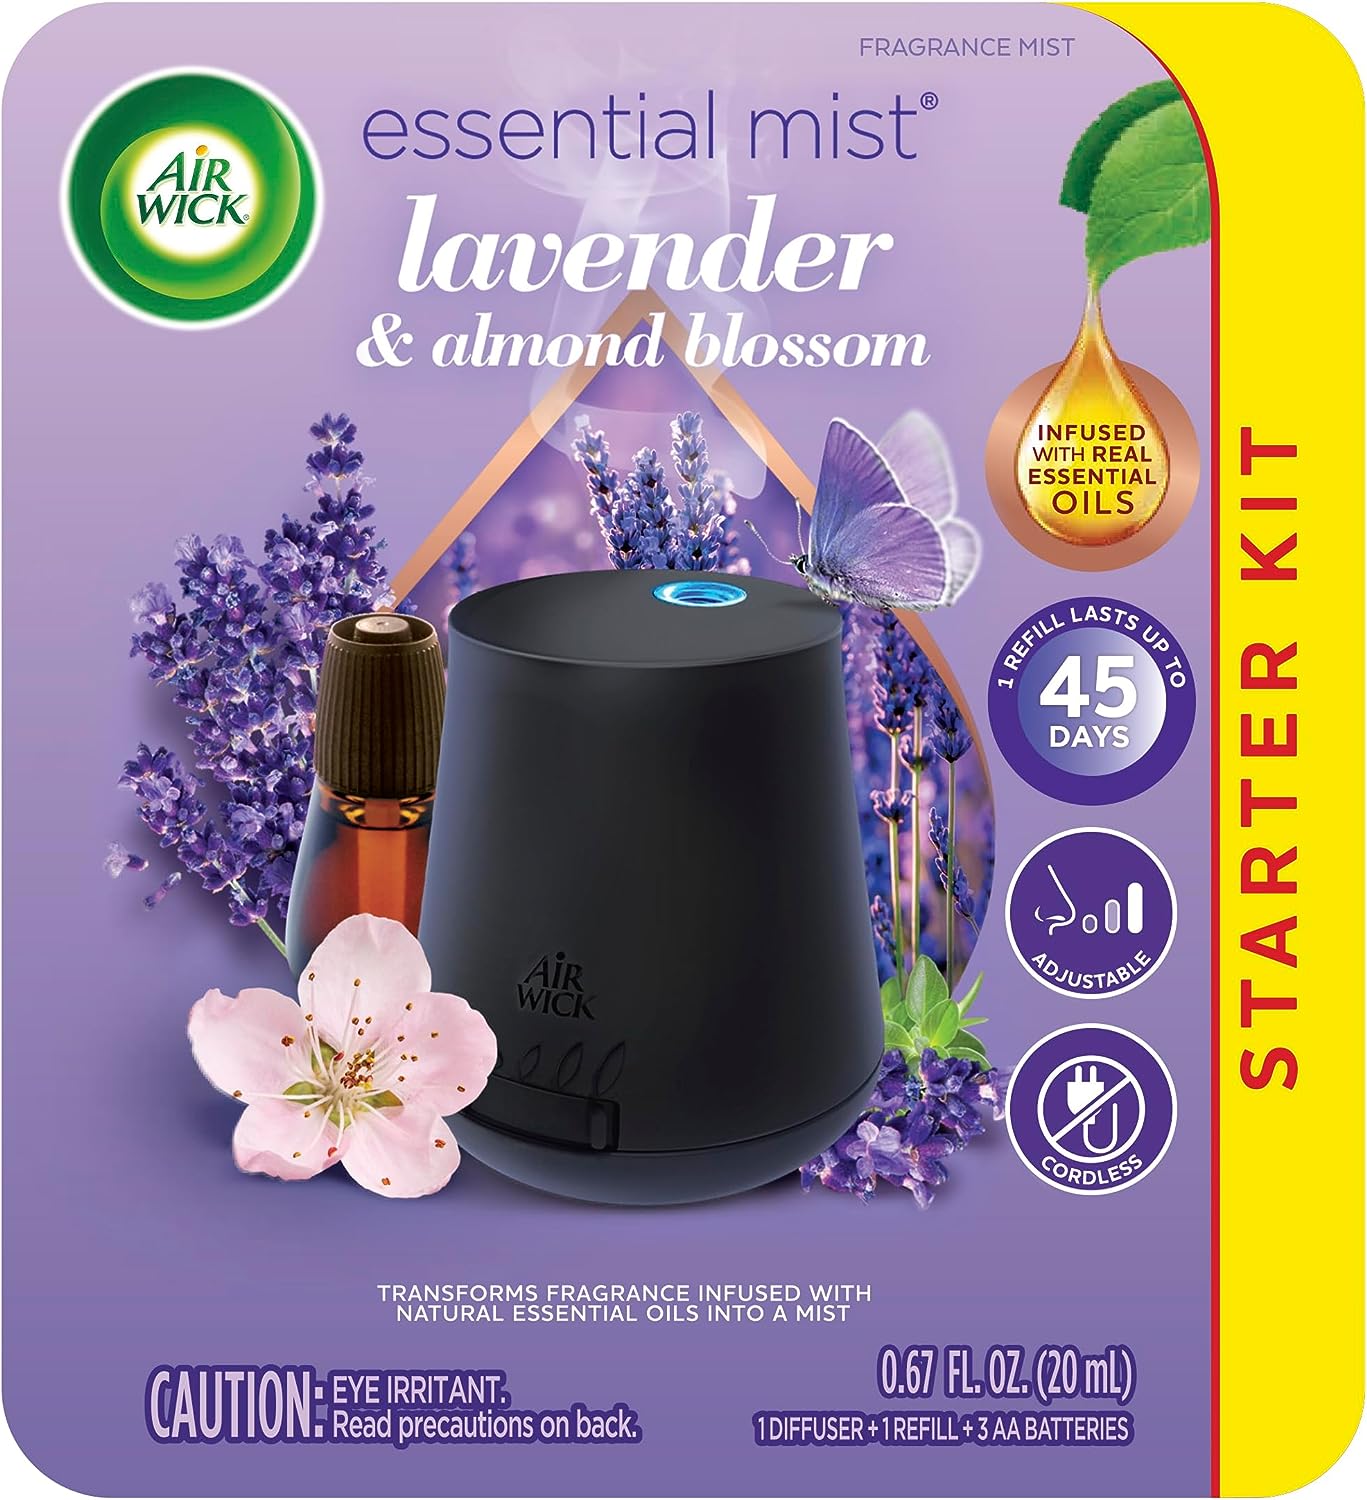 Air Wick Essential Oils Diffuser Mist Kit (Lavender & Almond Blossom) $5.28 + Free S&H w/ Prime